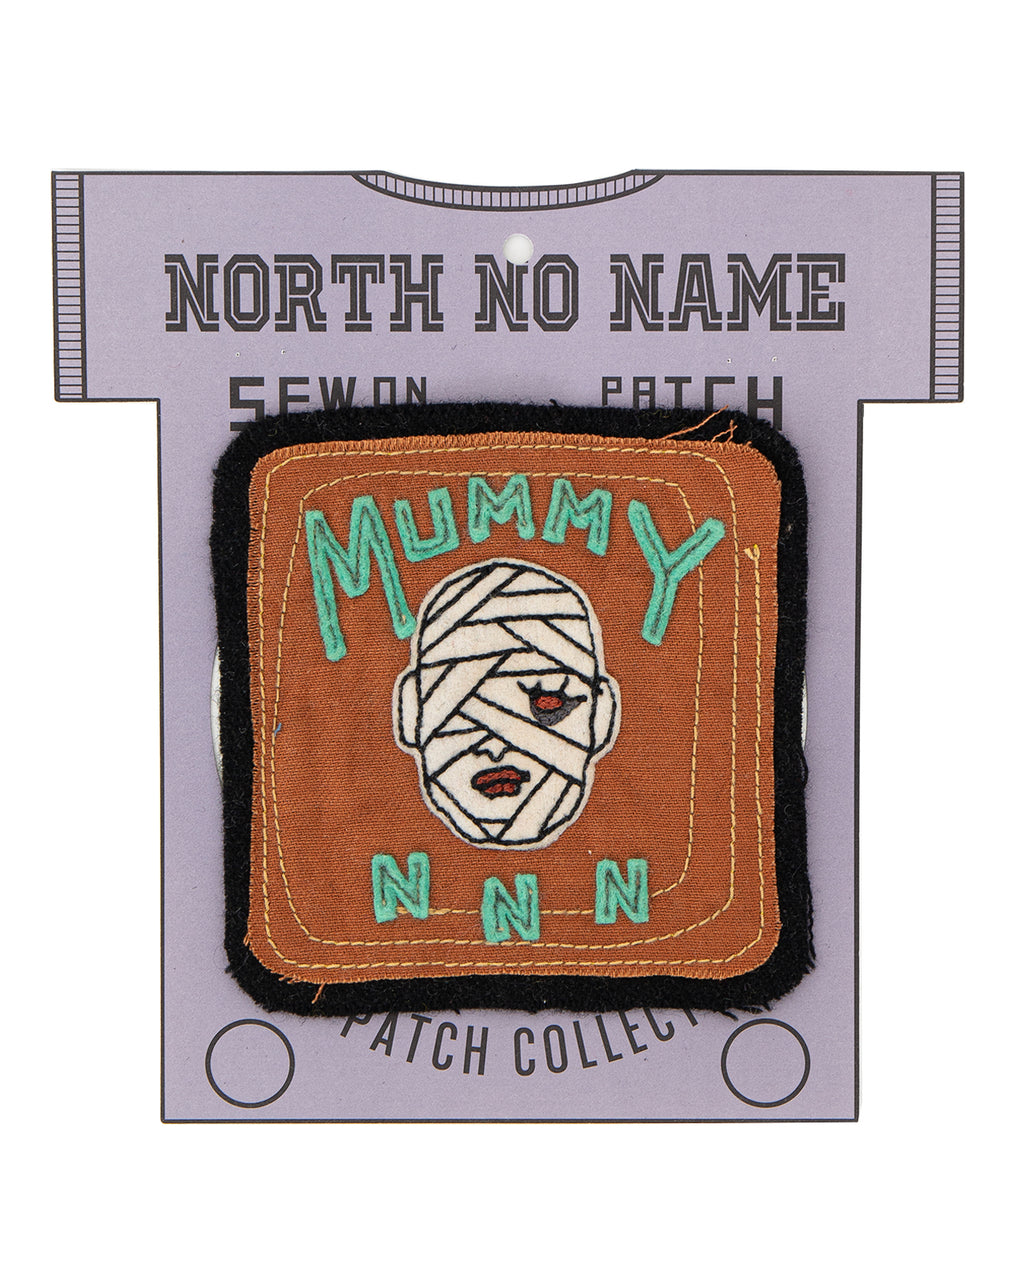 North No Name Felt Patch, Mummy